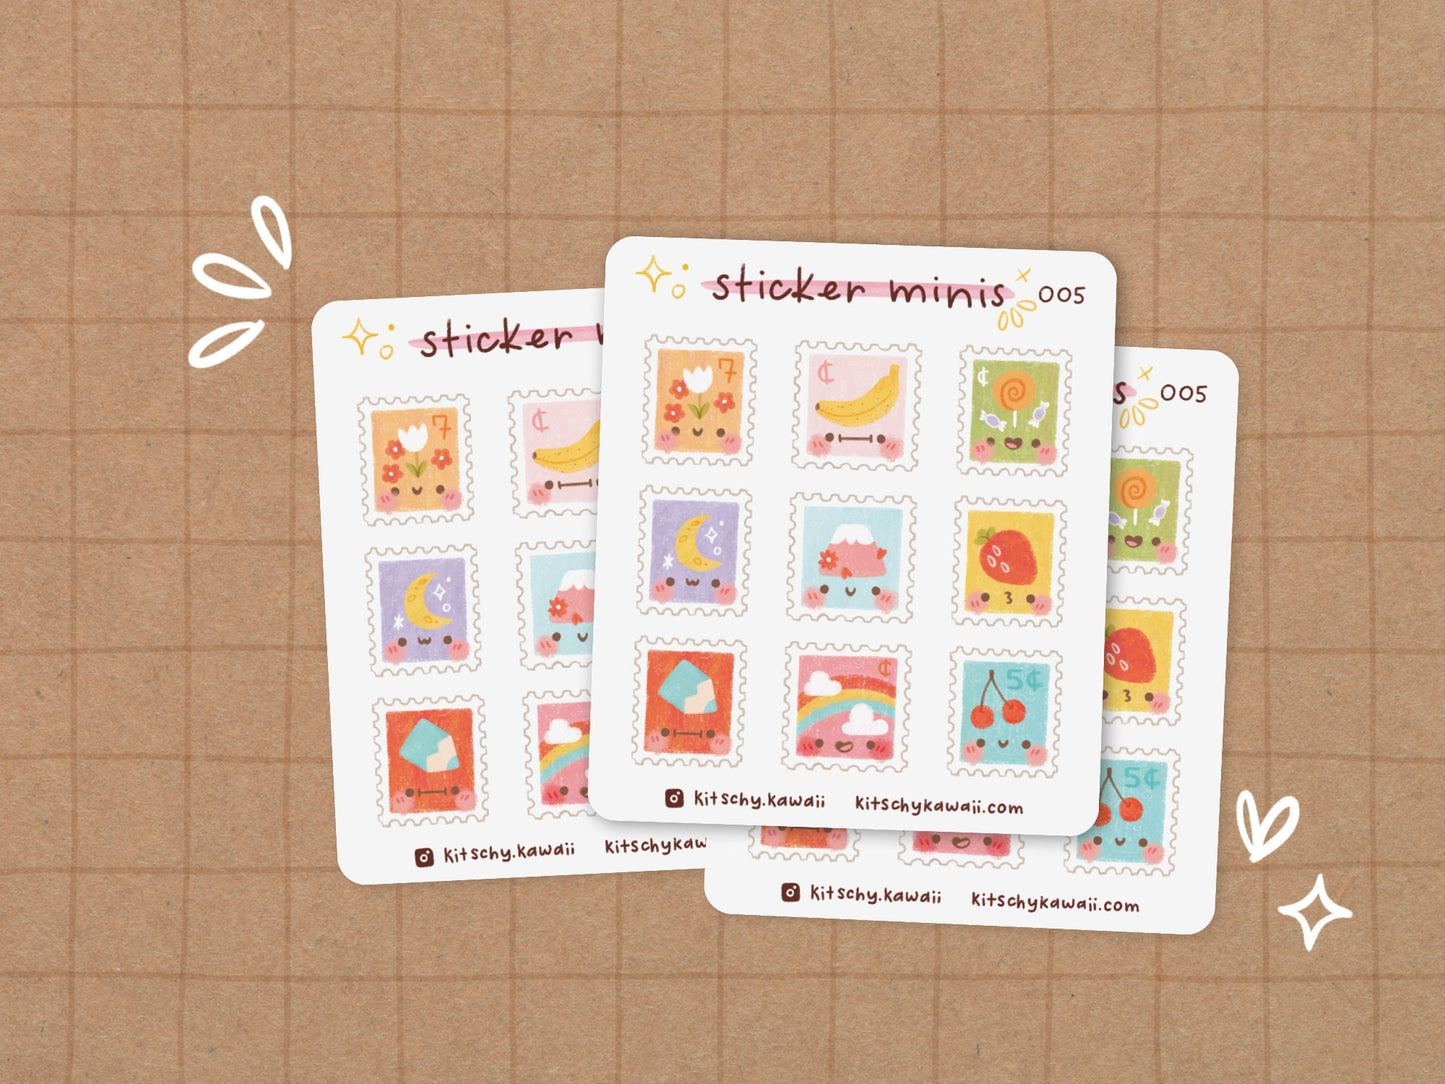 Stamp Mini Sticker Sheet